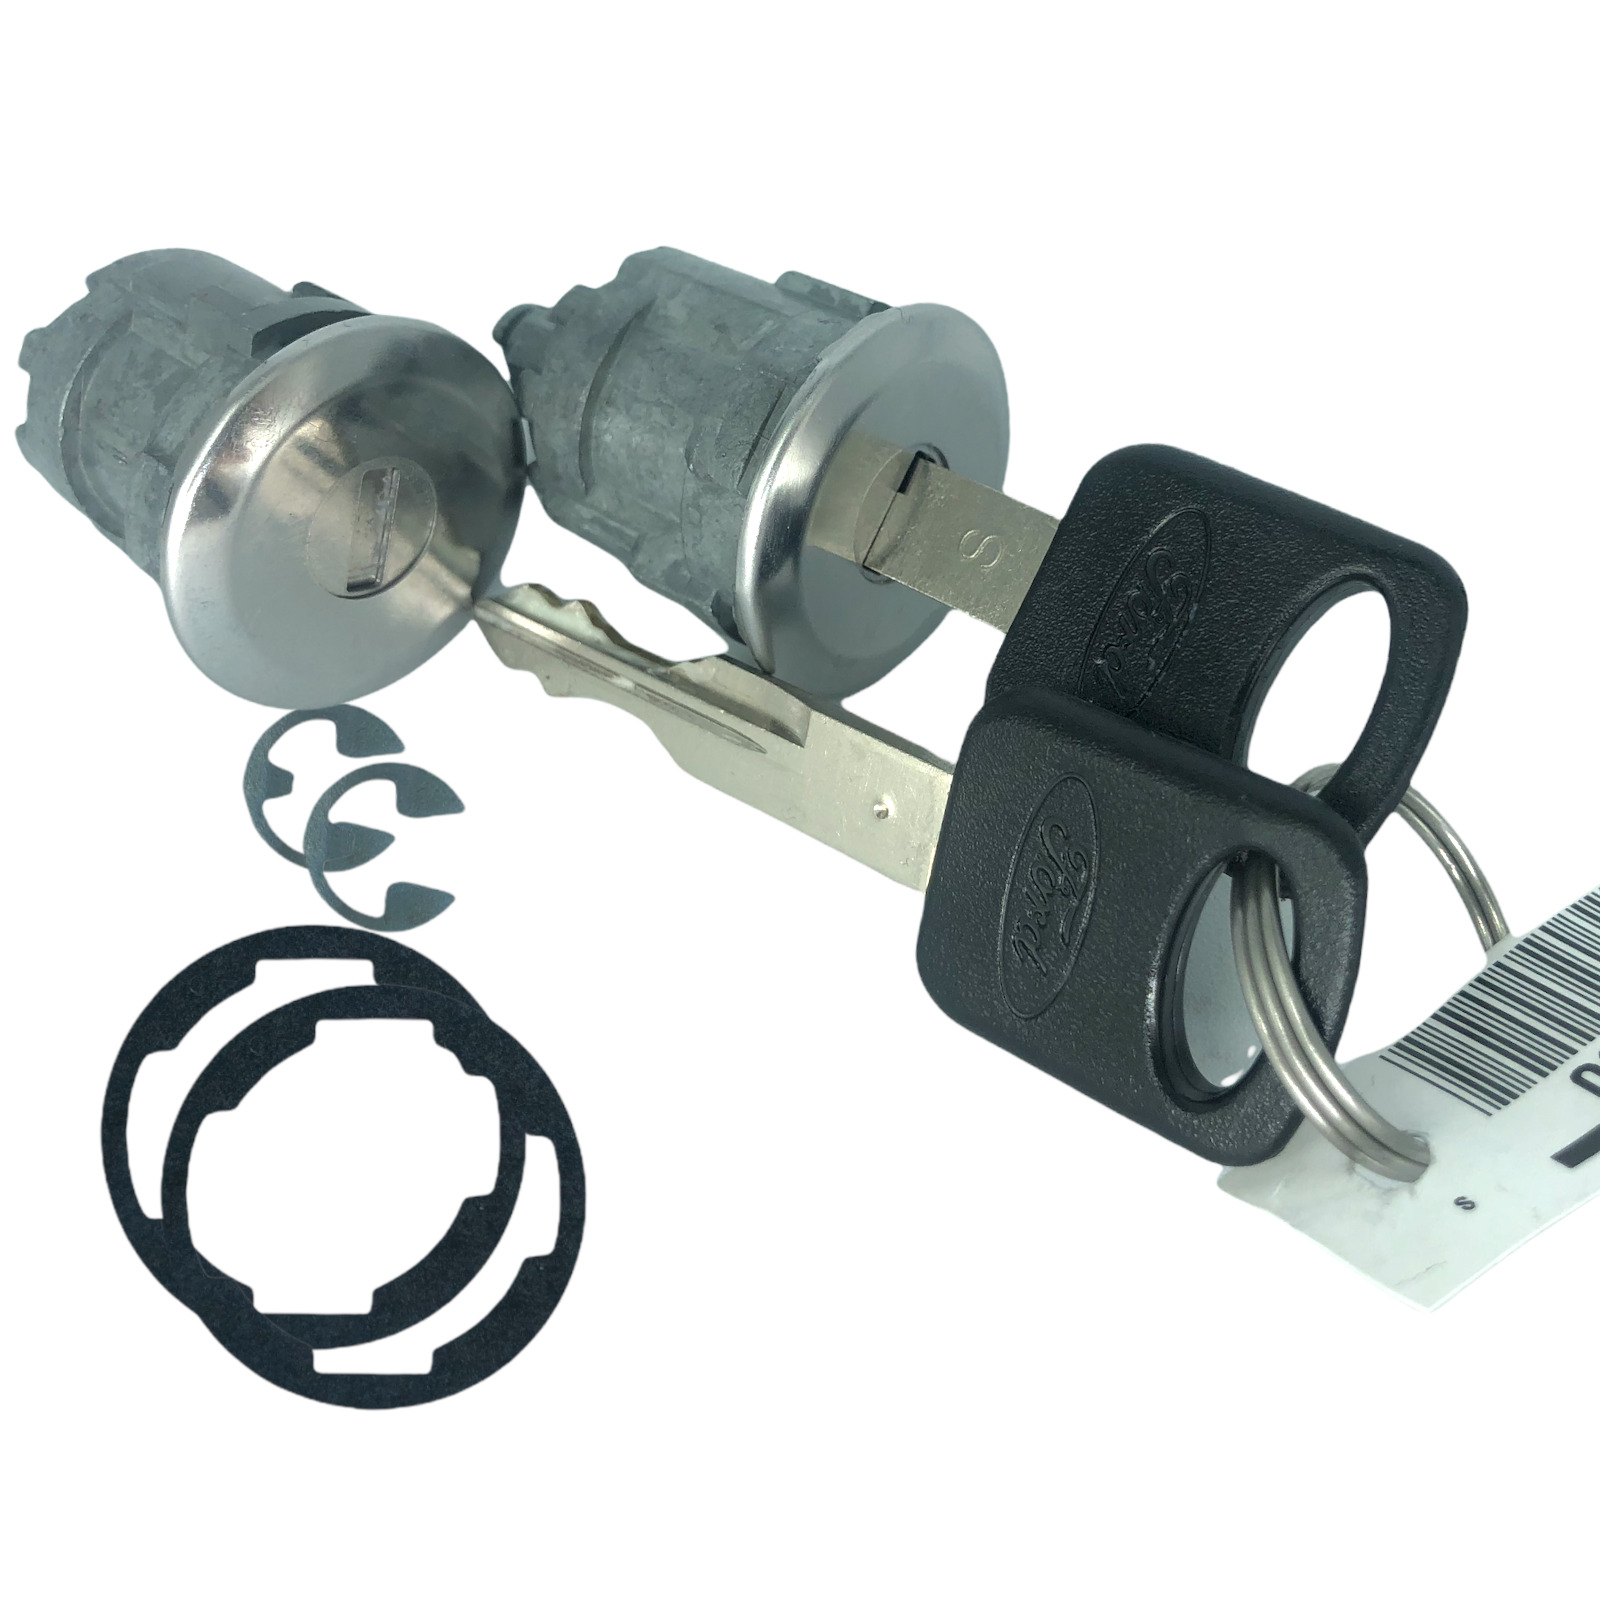 Door Lock Cylinder & Keys Set of 2 for Ford Mercury Mazda Truck SUV